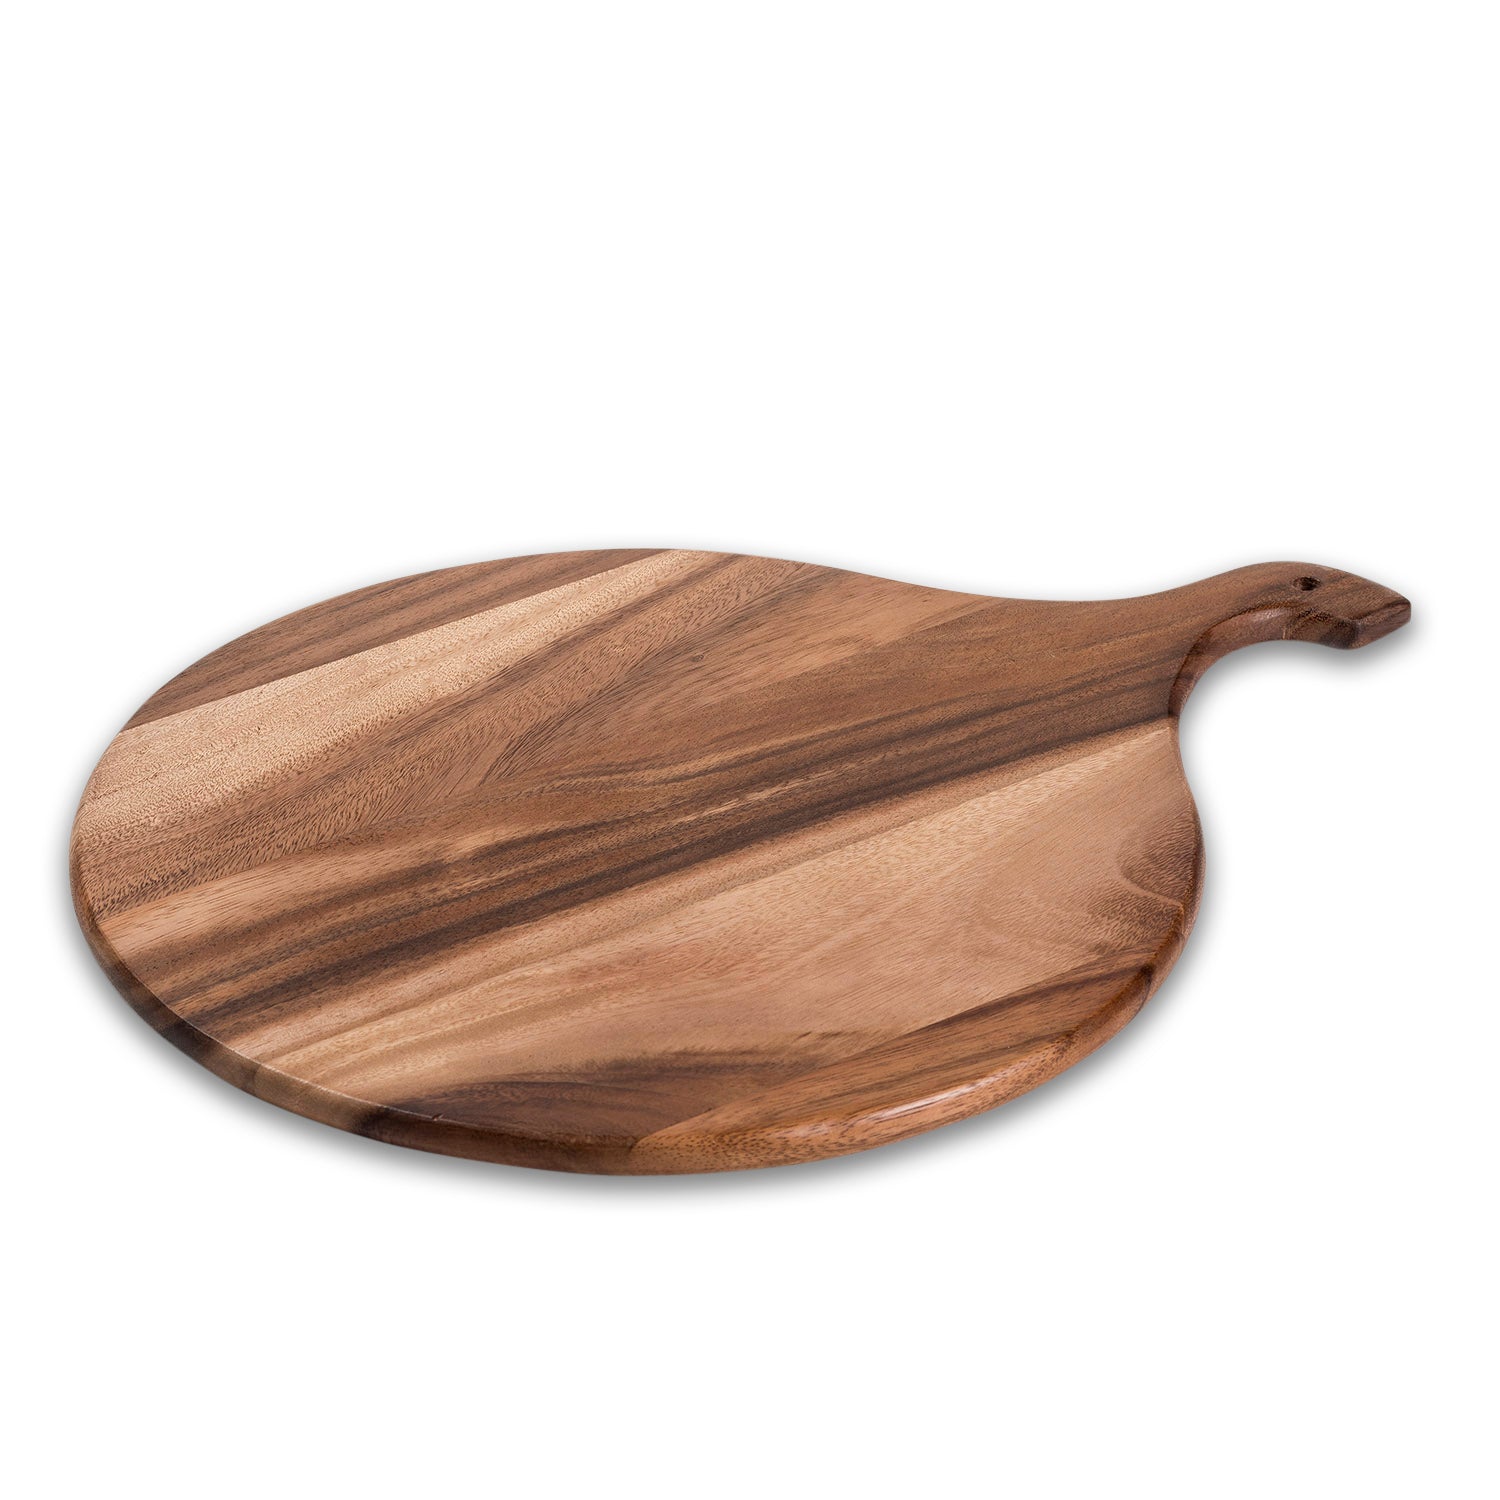 Acacia Wood Cutting/ Charcuterie Board - Medium Round